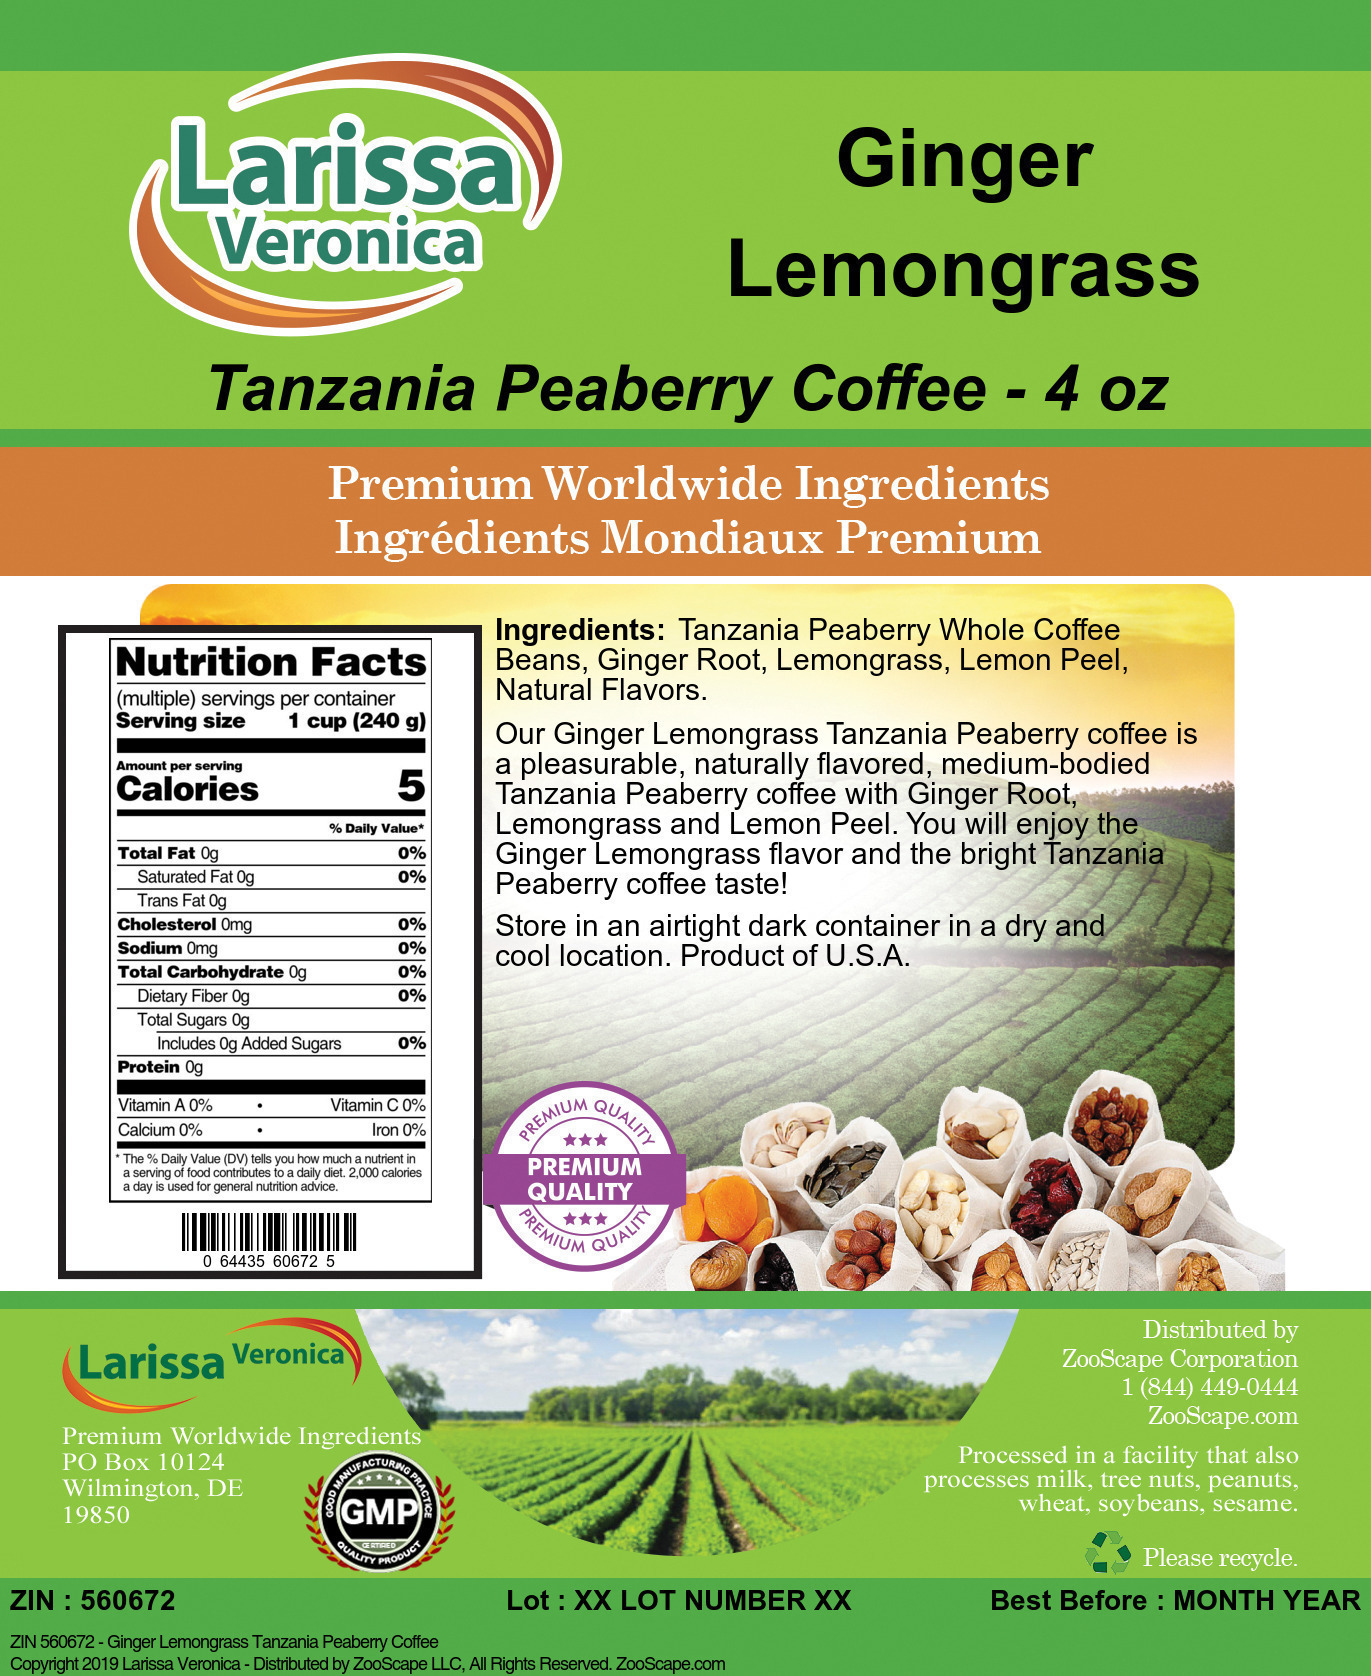 Ginger Lemongrass Tanzania Peaberry Coffee - Label